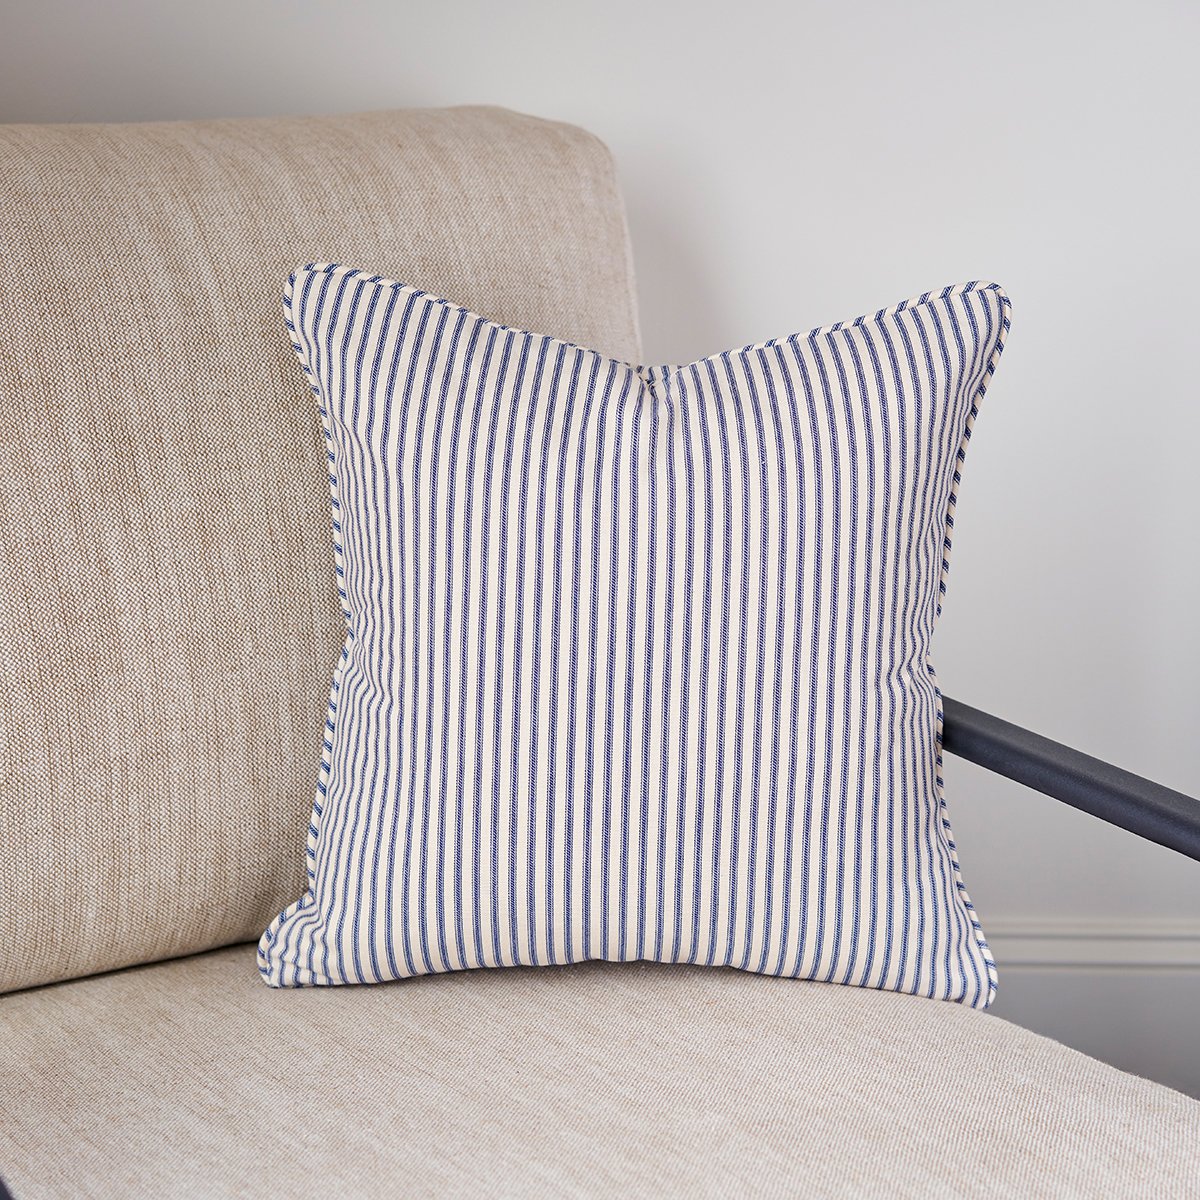 Navy Blue Ticking Stripe Throw Pillow Cover 18x18